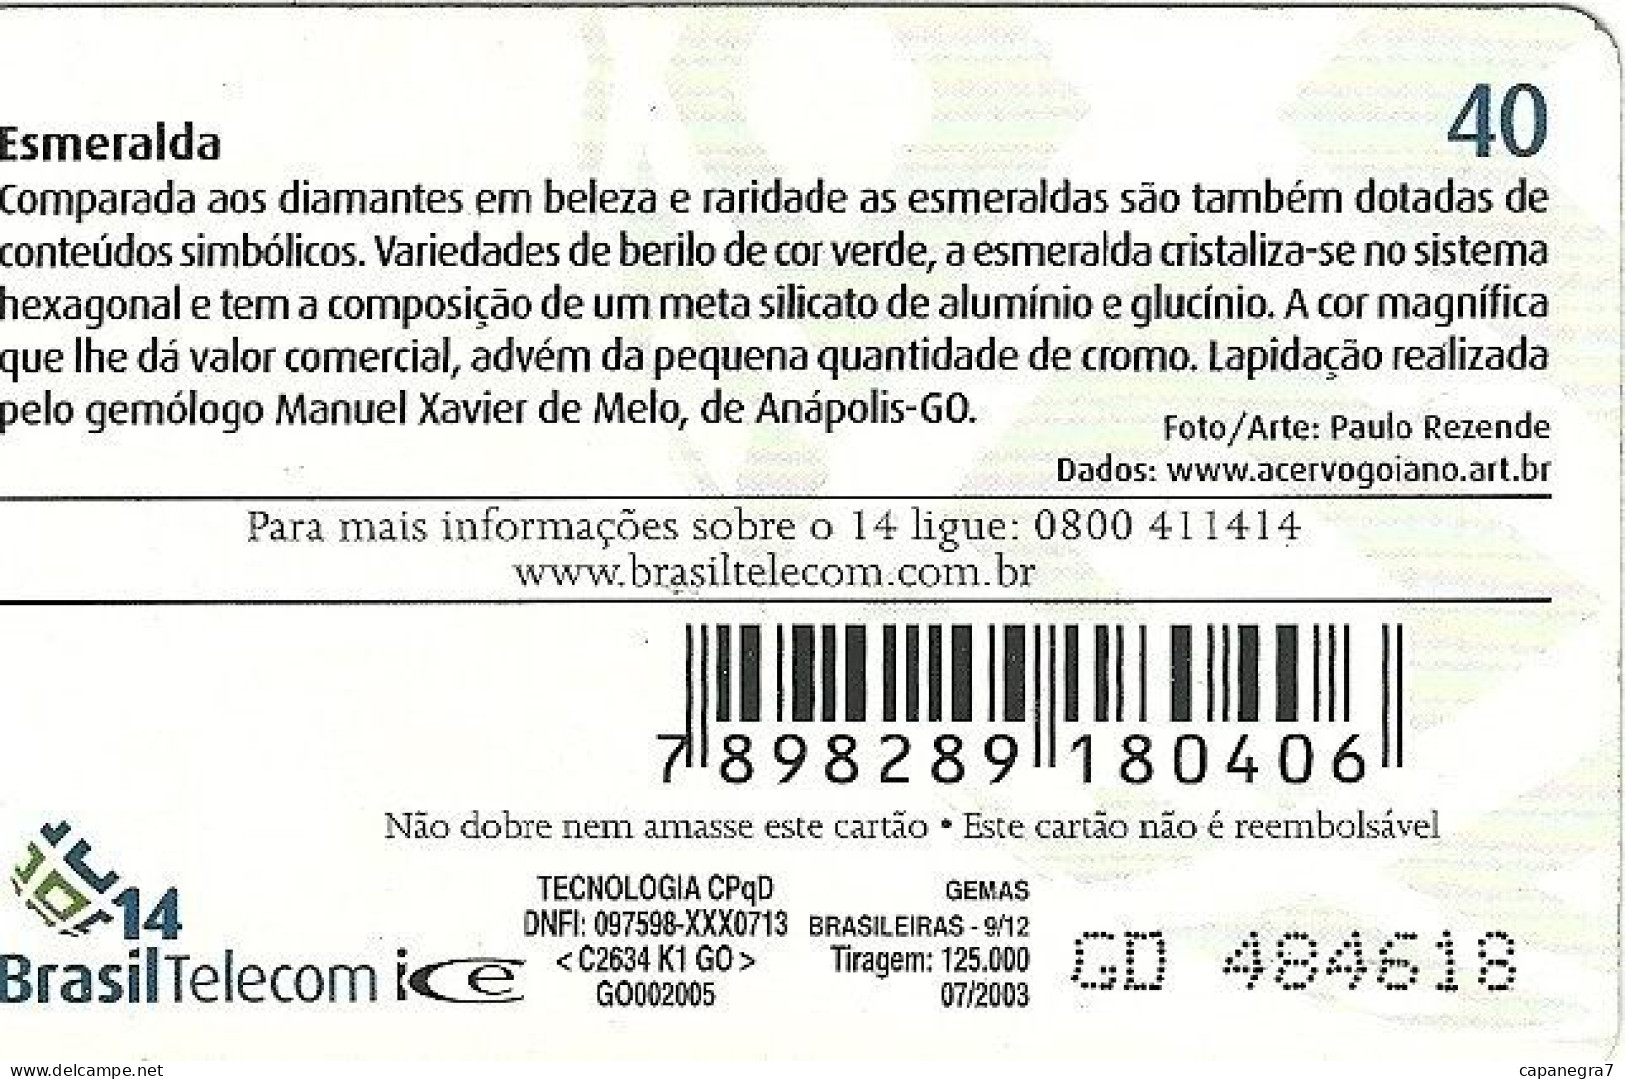 Esmeralda, Mineral, Brasil Telecom GO 24, Goiás (Telegoias), Brazil - Brasile